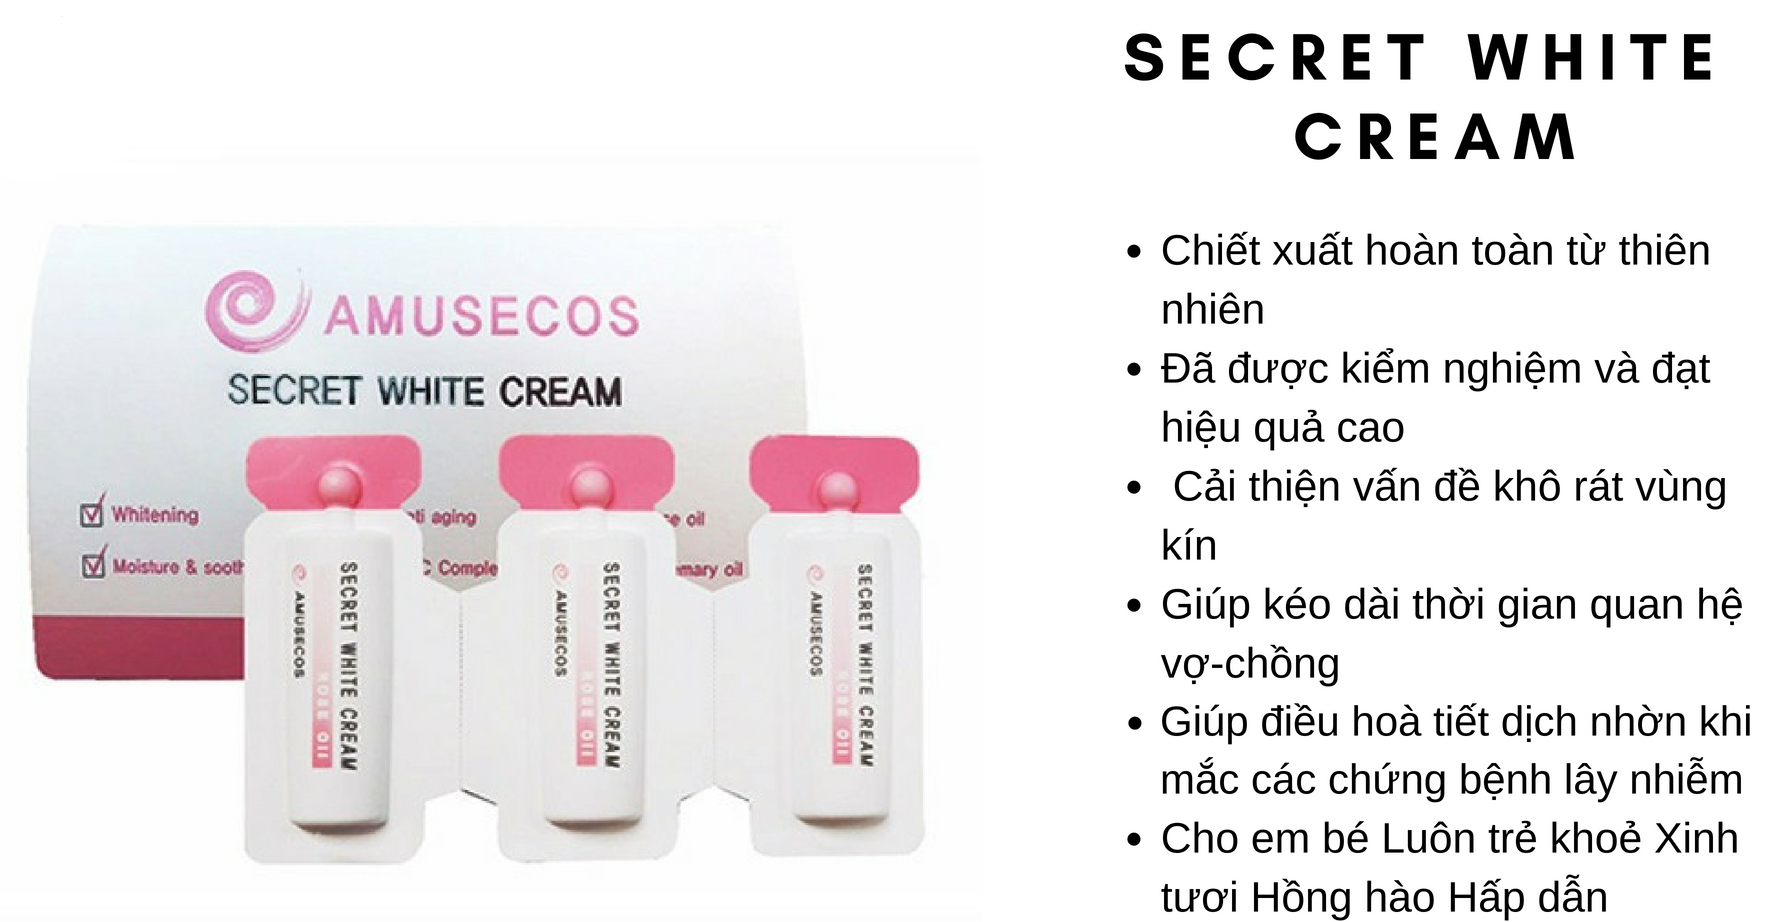 Amusecos Secret White Cream Rose Oil review, Cách sử dụng Amusecos Secret White Cream, Amusecos Secret White Cream, Secret White Cream có tốt không